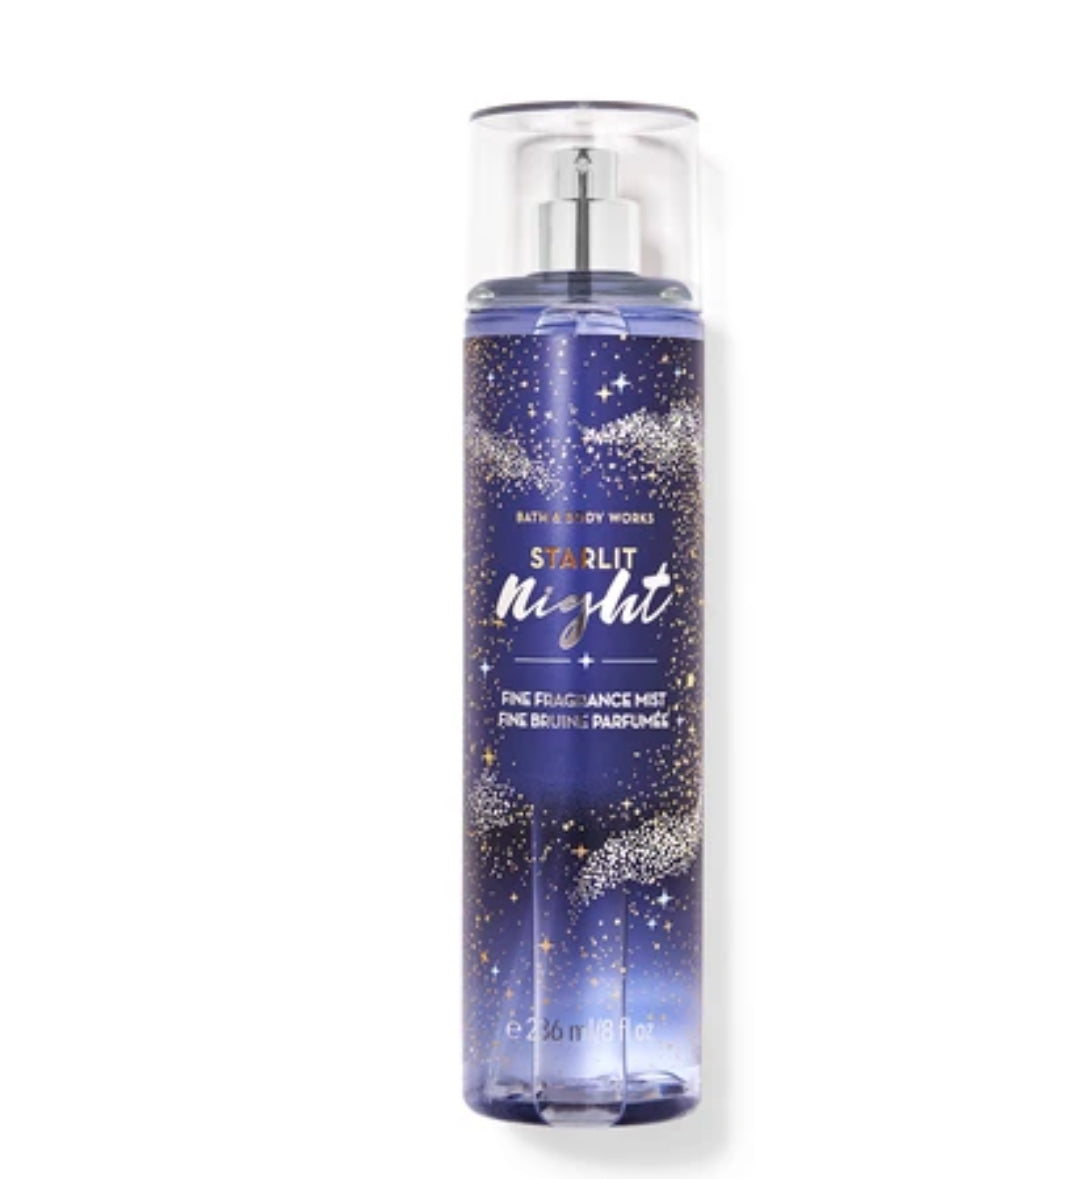 Starlit Night Fragrance Mist